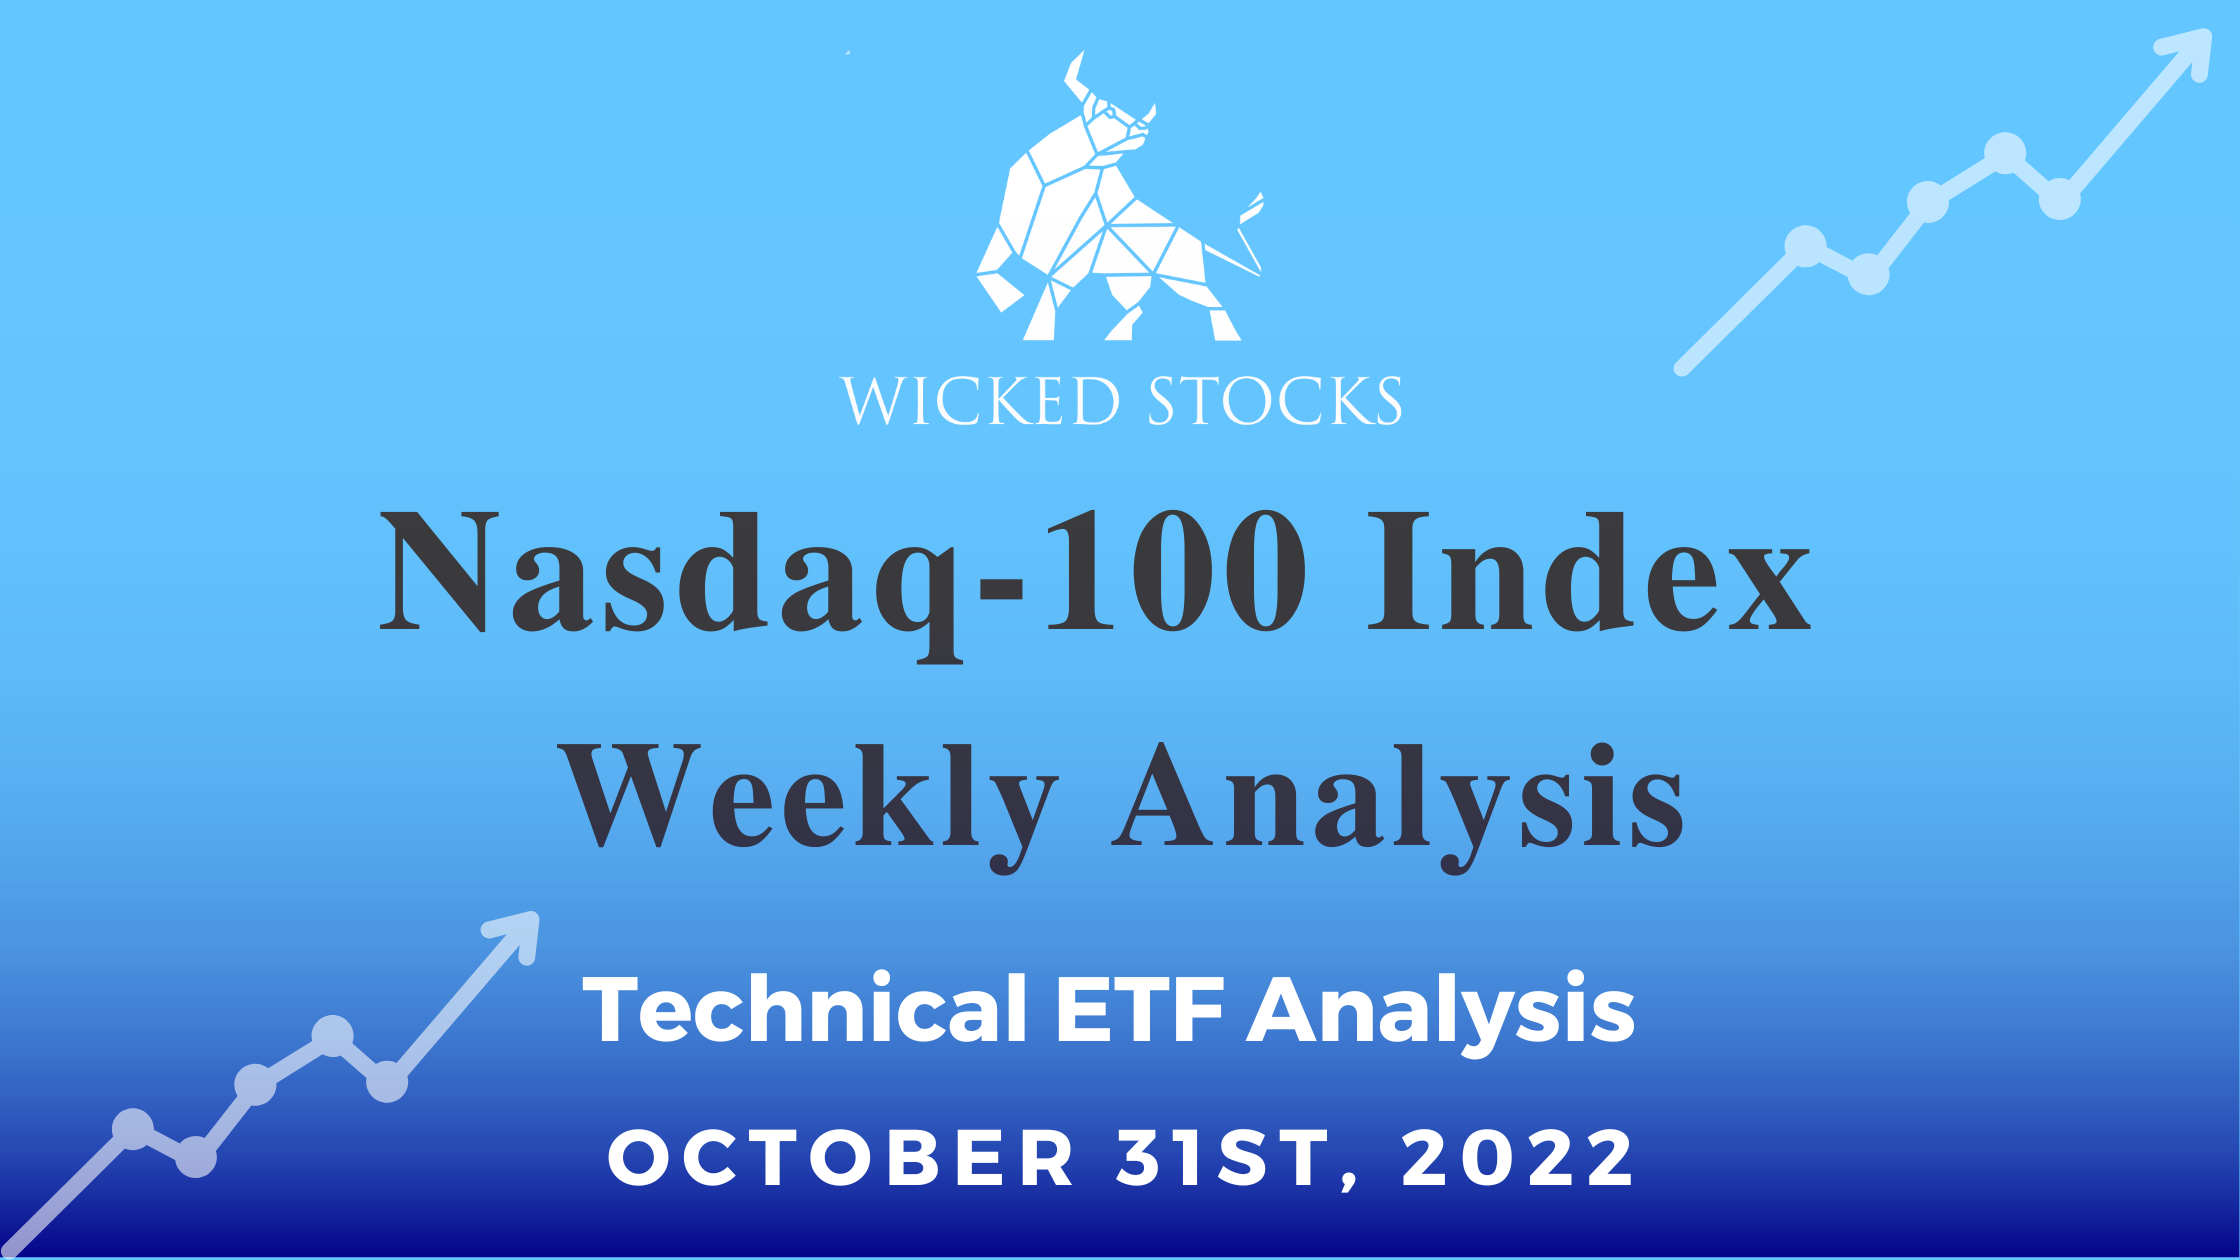 Nasdaq-100 Index Weekly Analysis 10/31/22